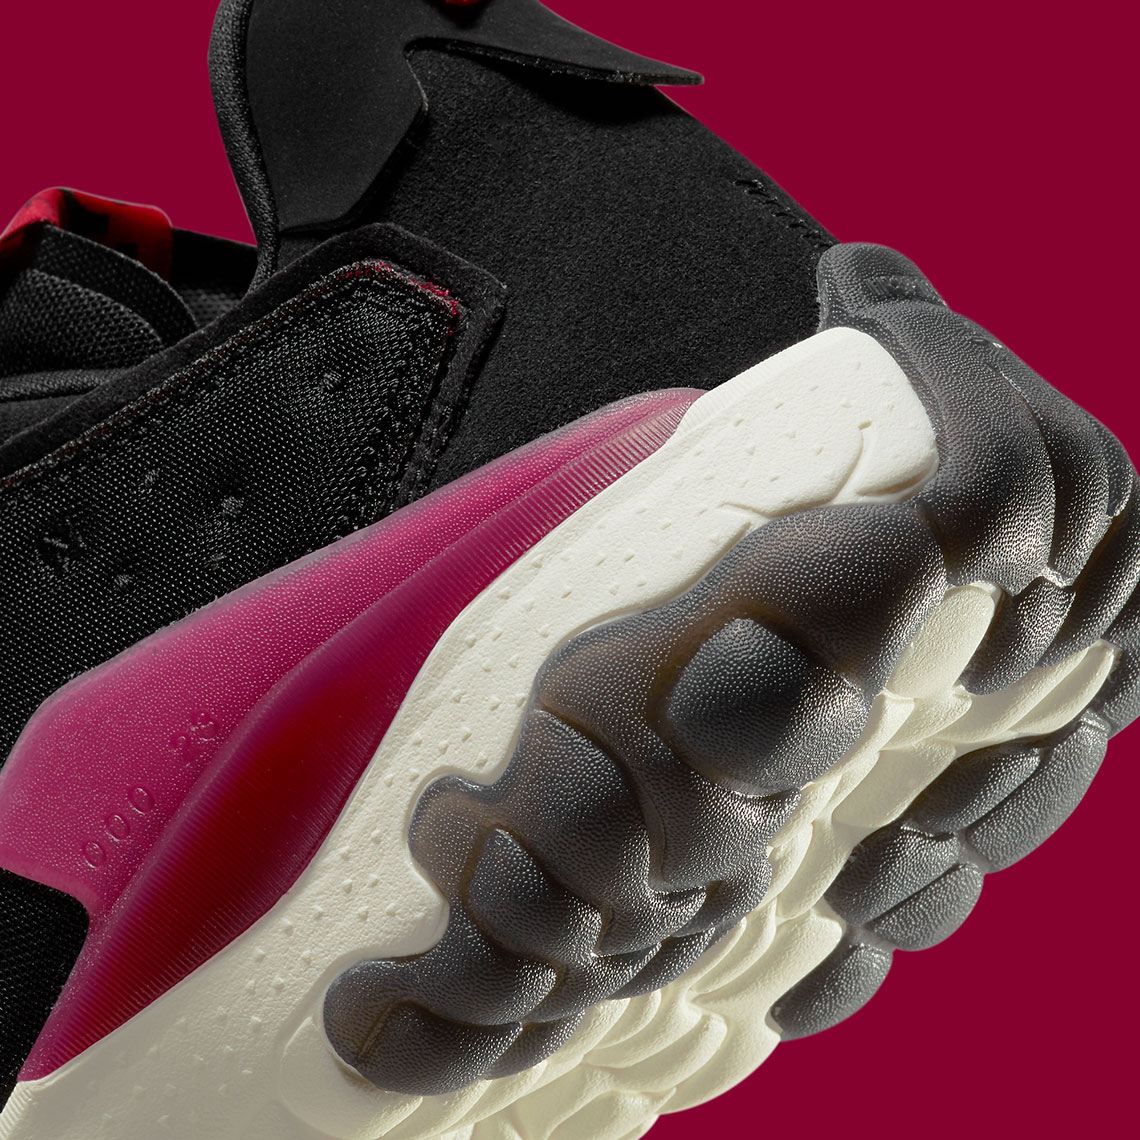 Nike air jordan Includes 1 retro smoke grey кроссовки найк аир джордан